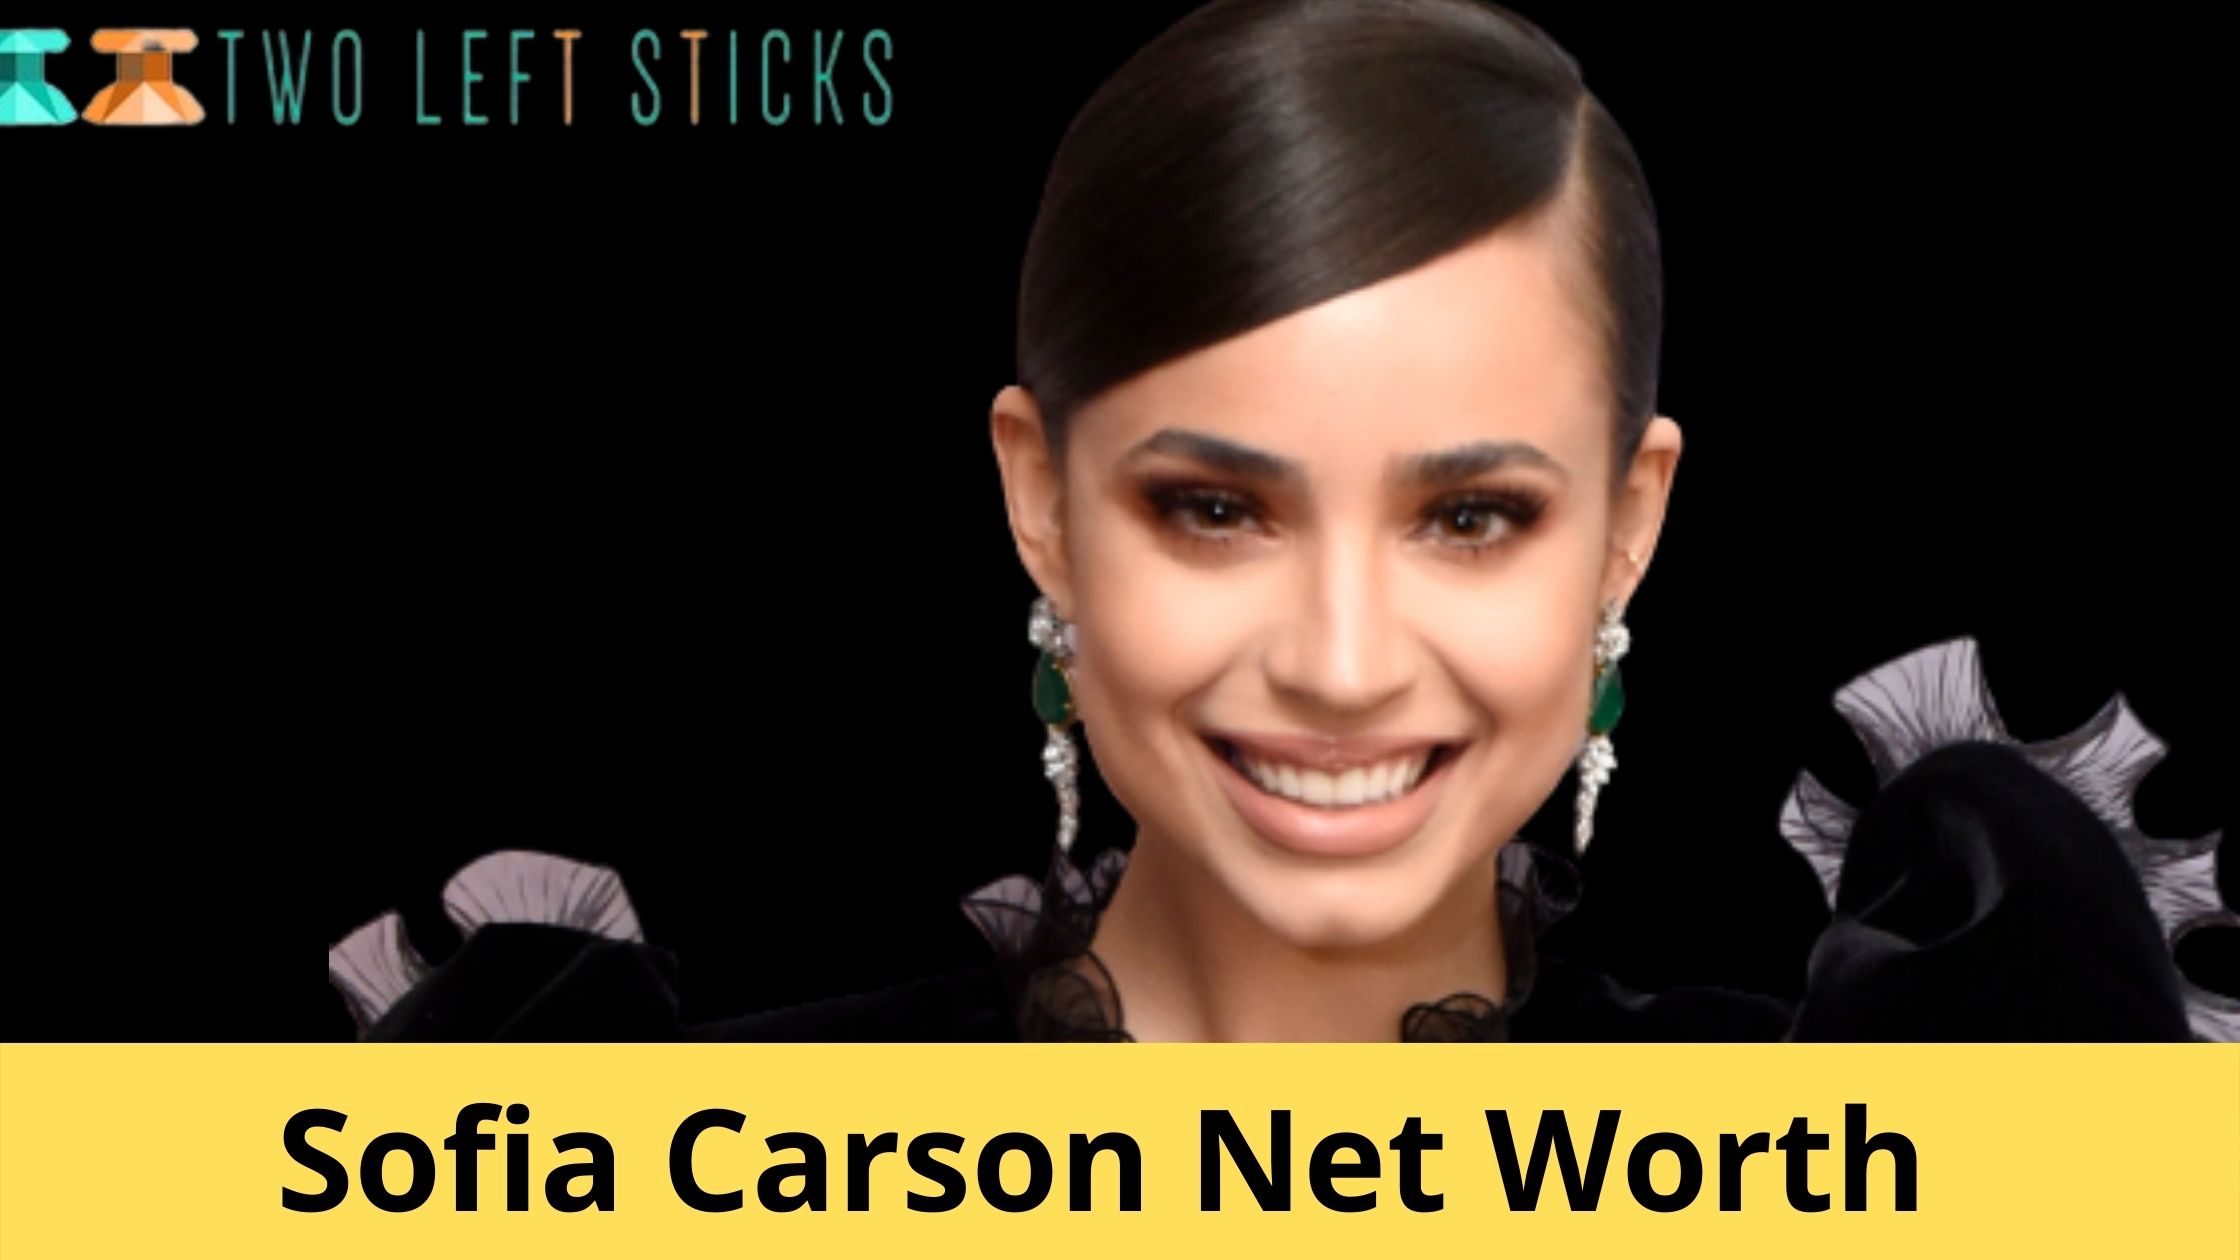 Sofia-Carson-Net-Worth-Twoleftsticks(1)